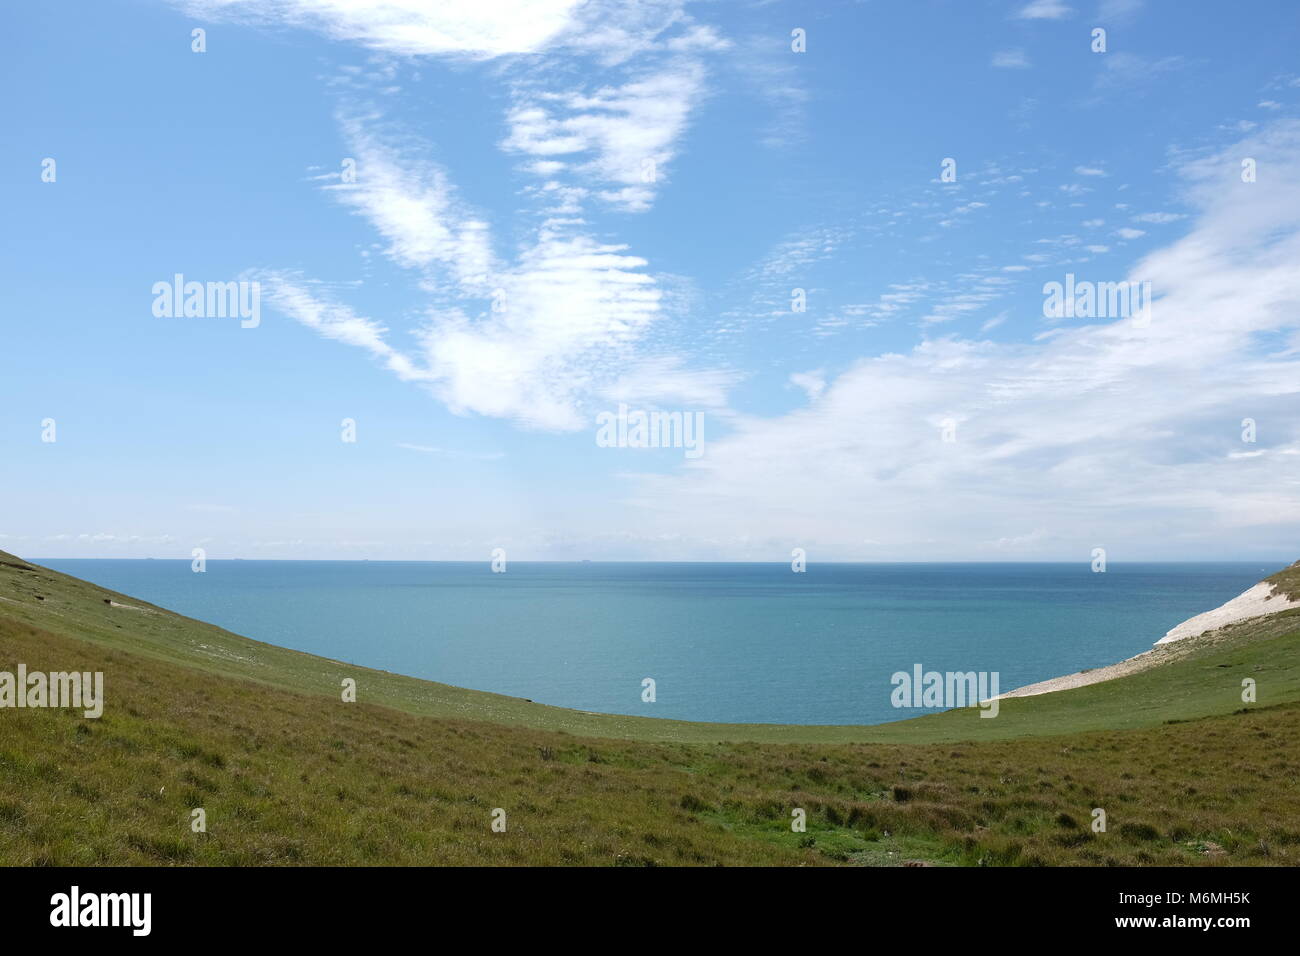 Canale Inglese visualizzati tramite dip in South Downs Foto Stock